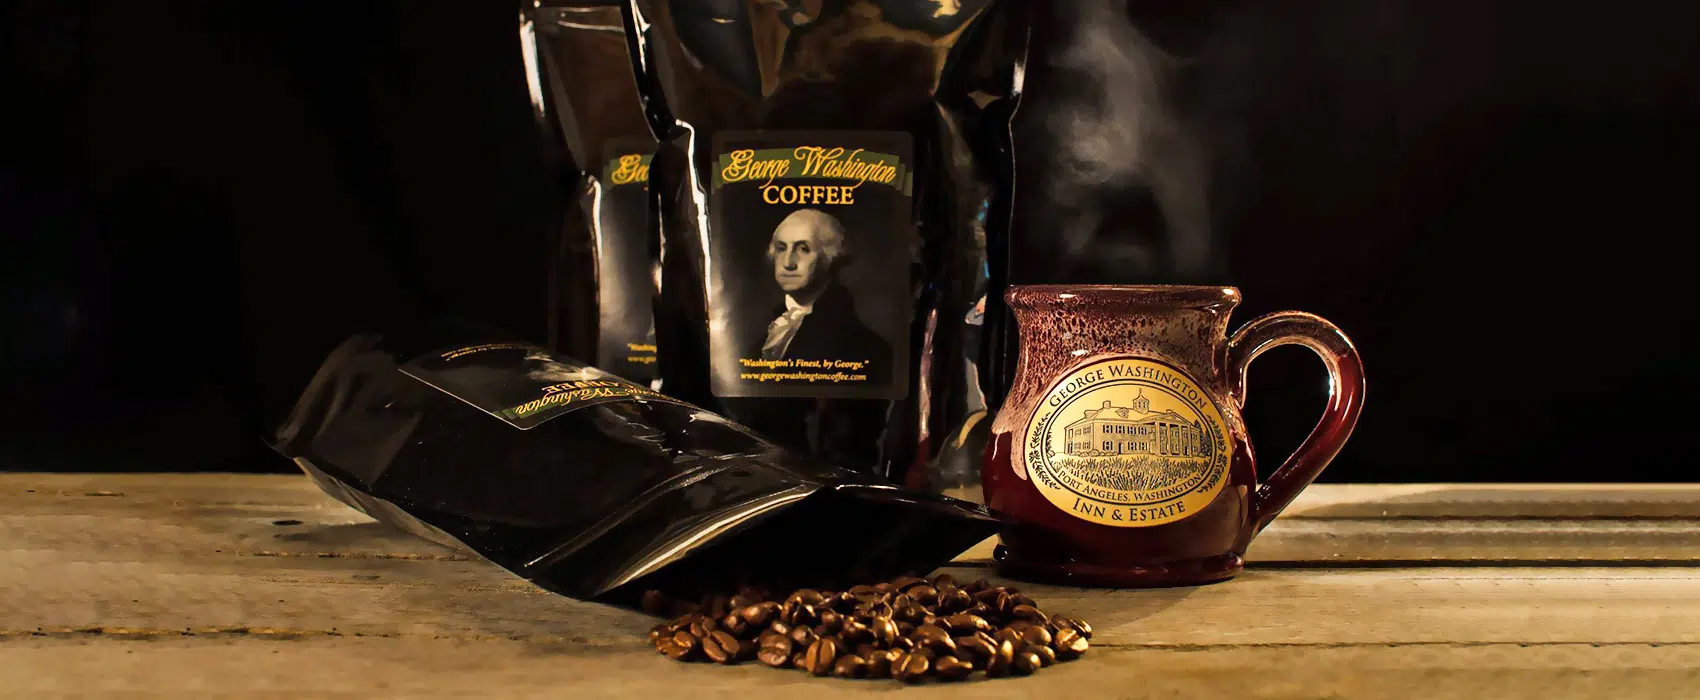 George Washington Coffee